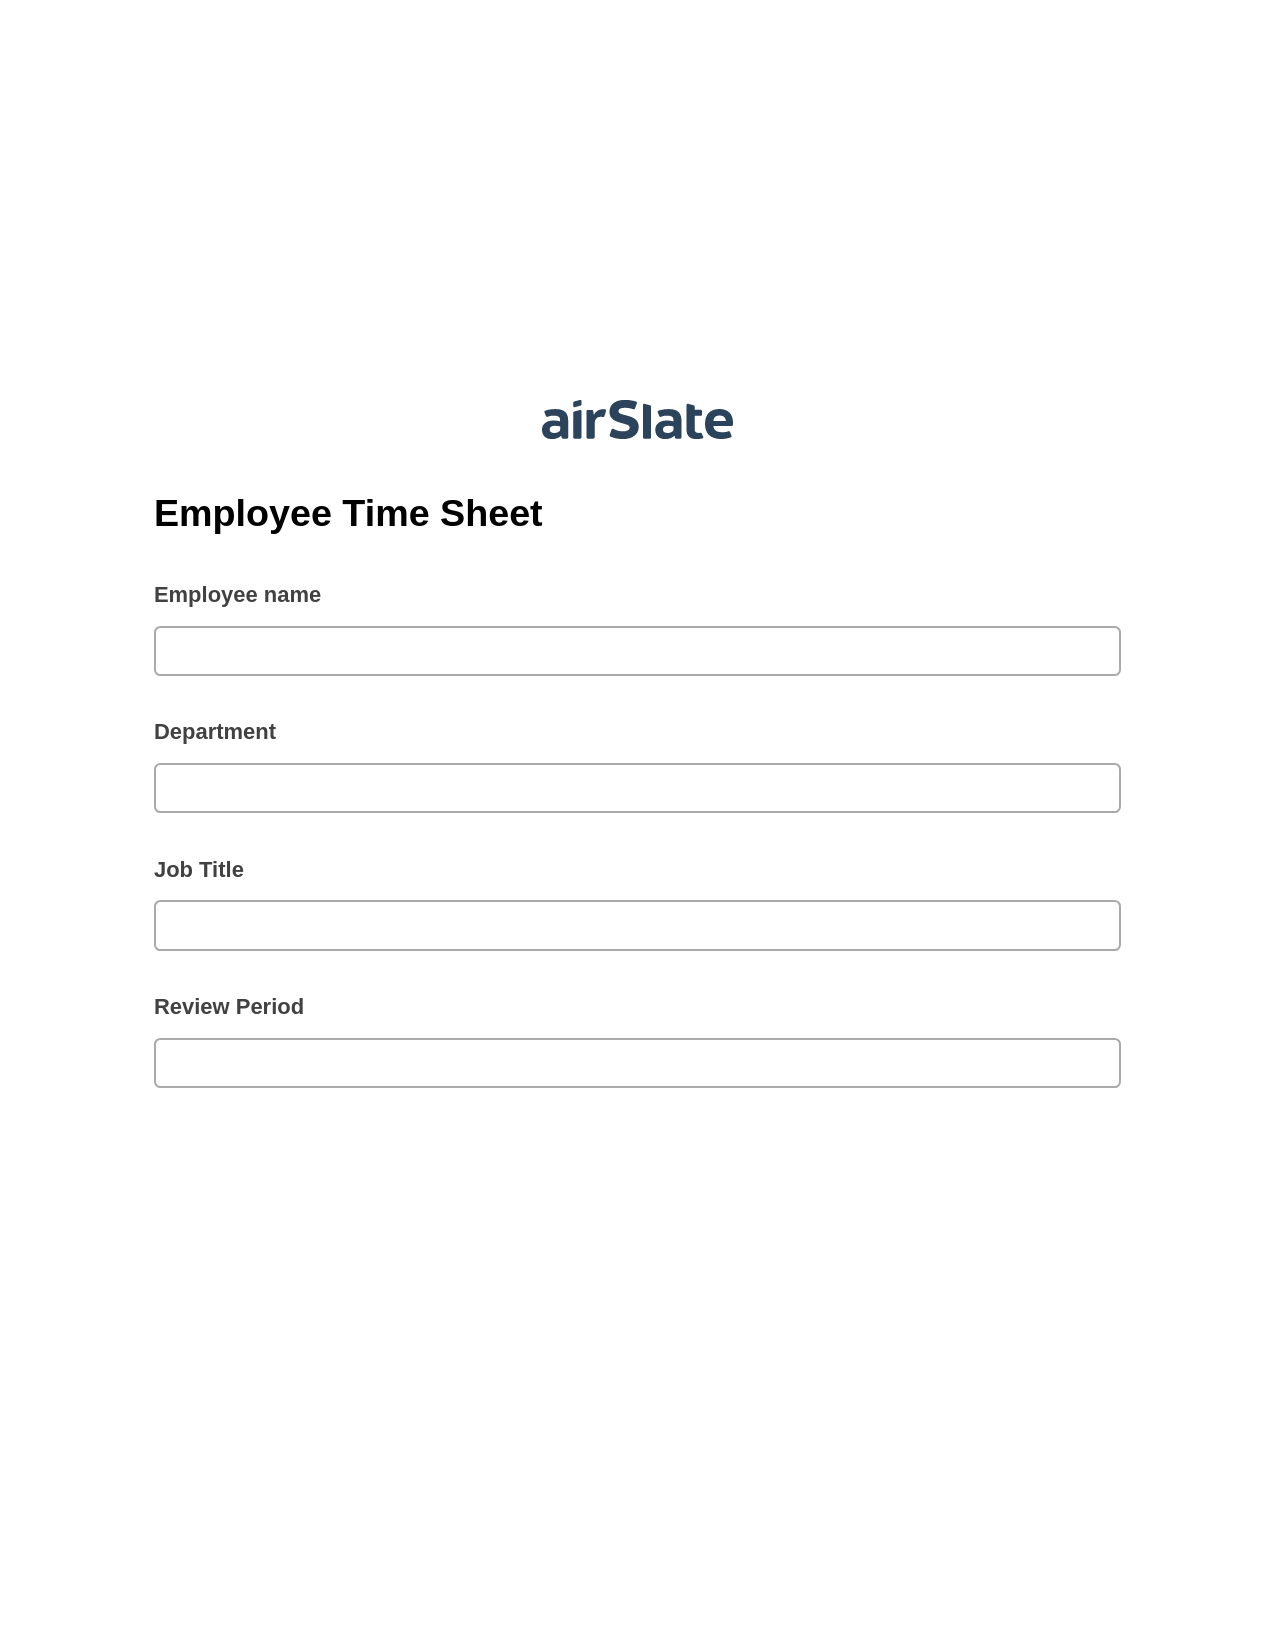 Multirole Employee Time Sheet Pre-fill Document Bot, Create Salesforce Records Bot, Export to MySQL Bot